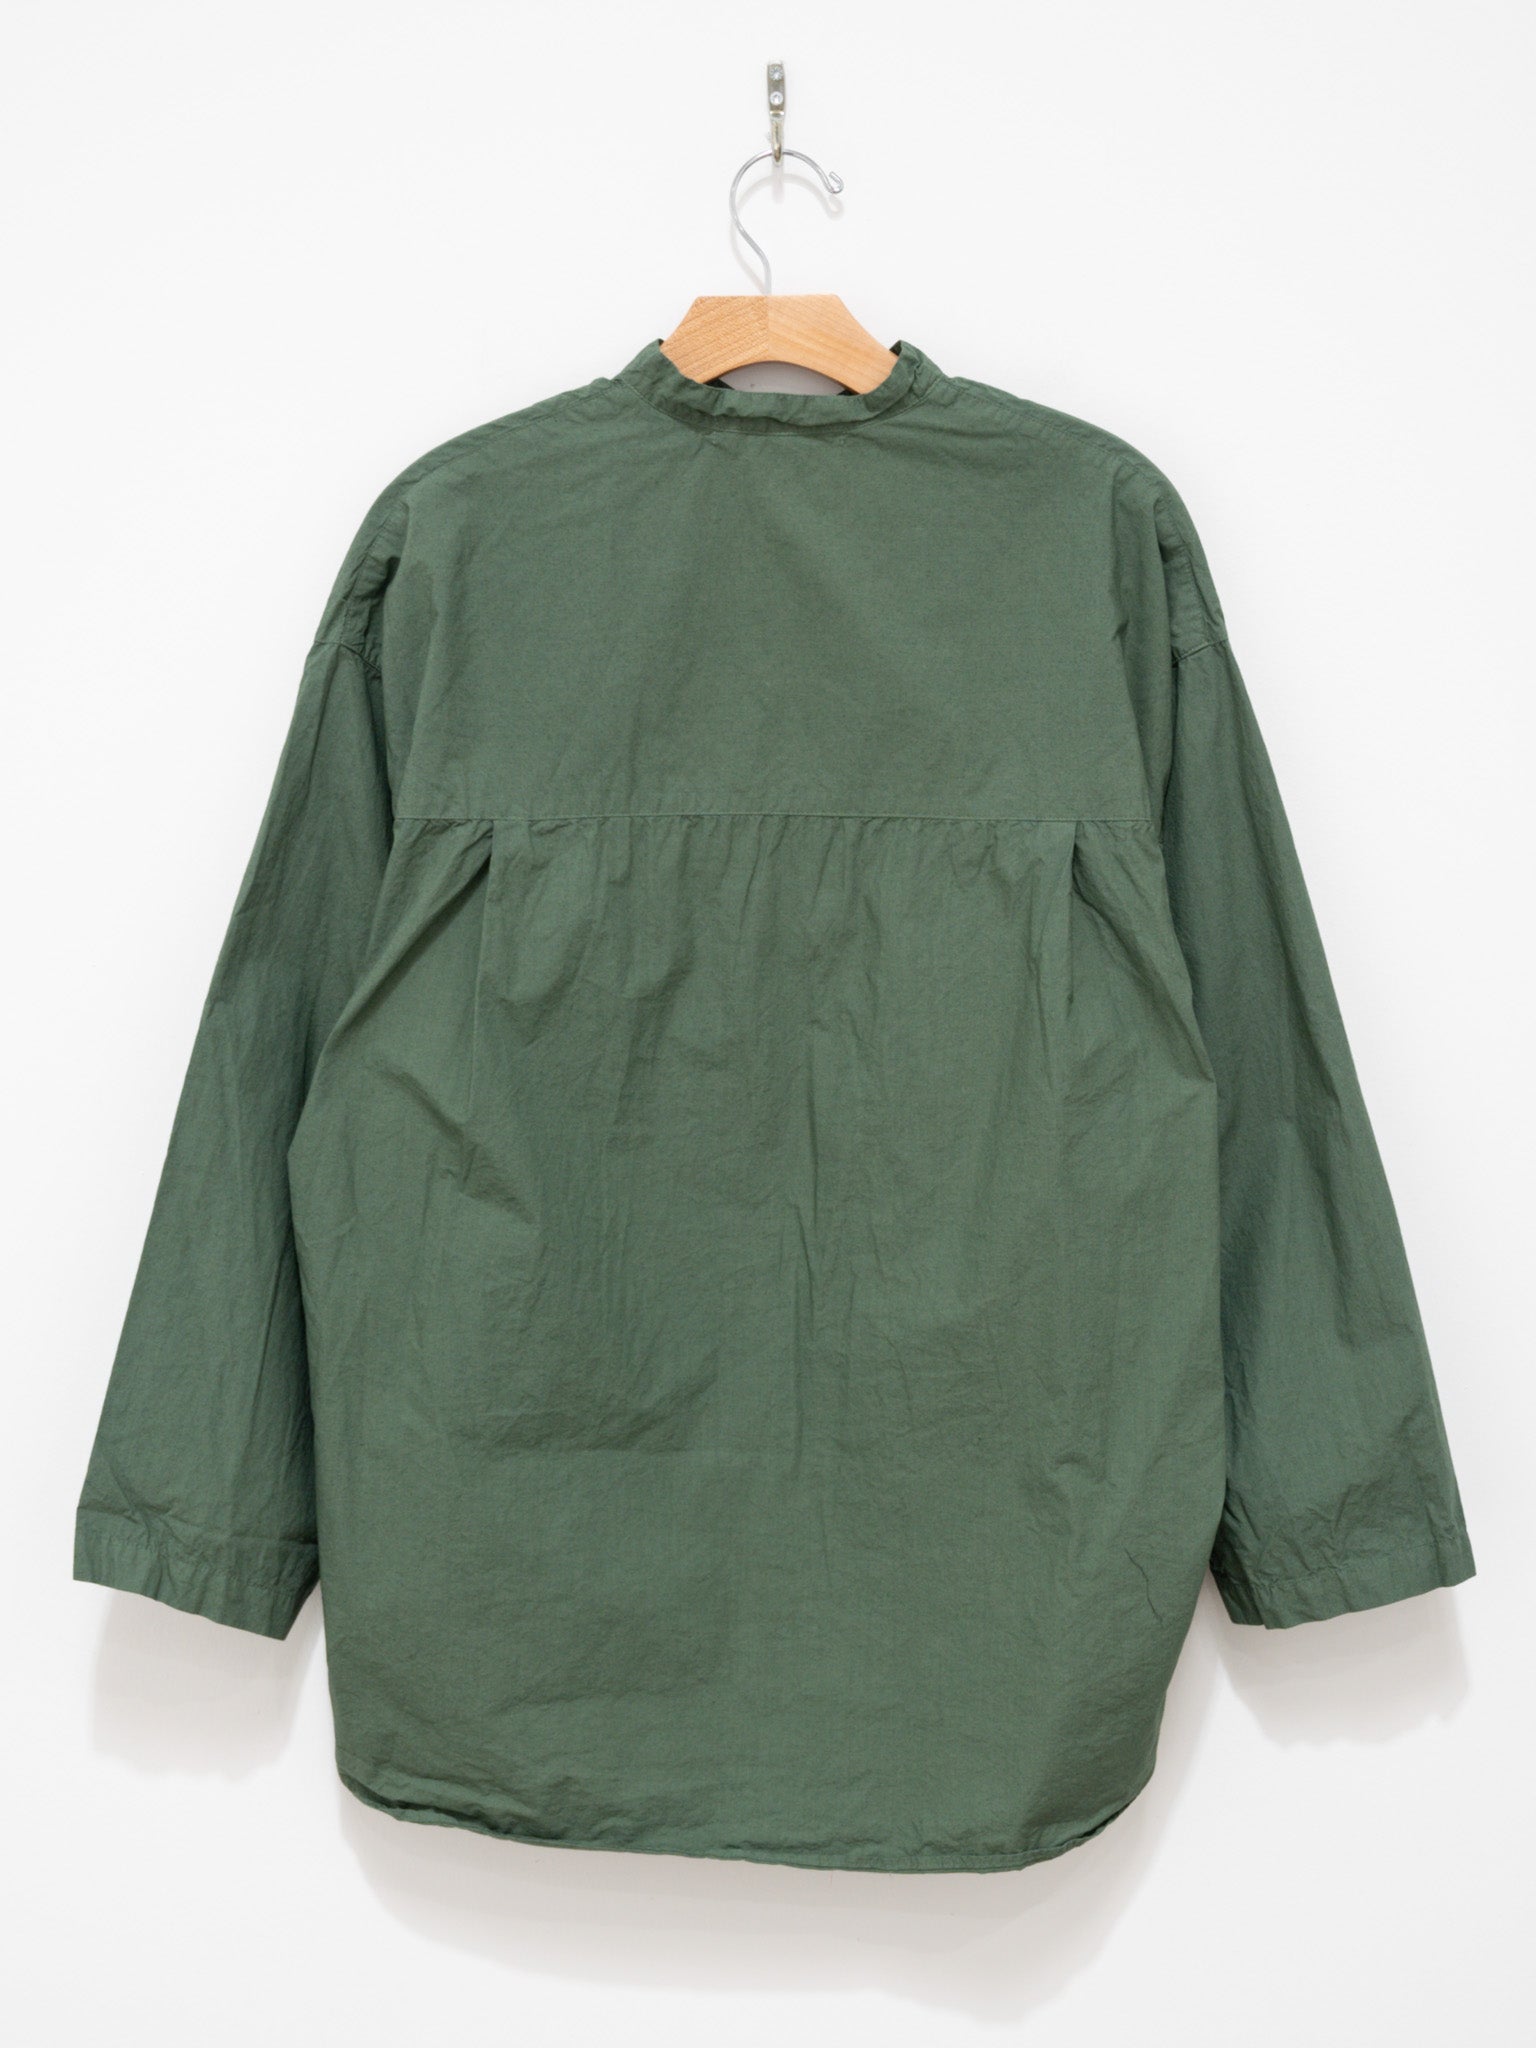 Namu Shop - Veritecoeur Stand Collar Shirt - Green